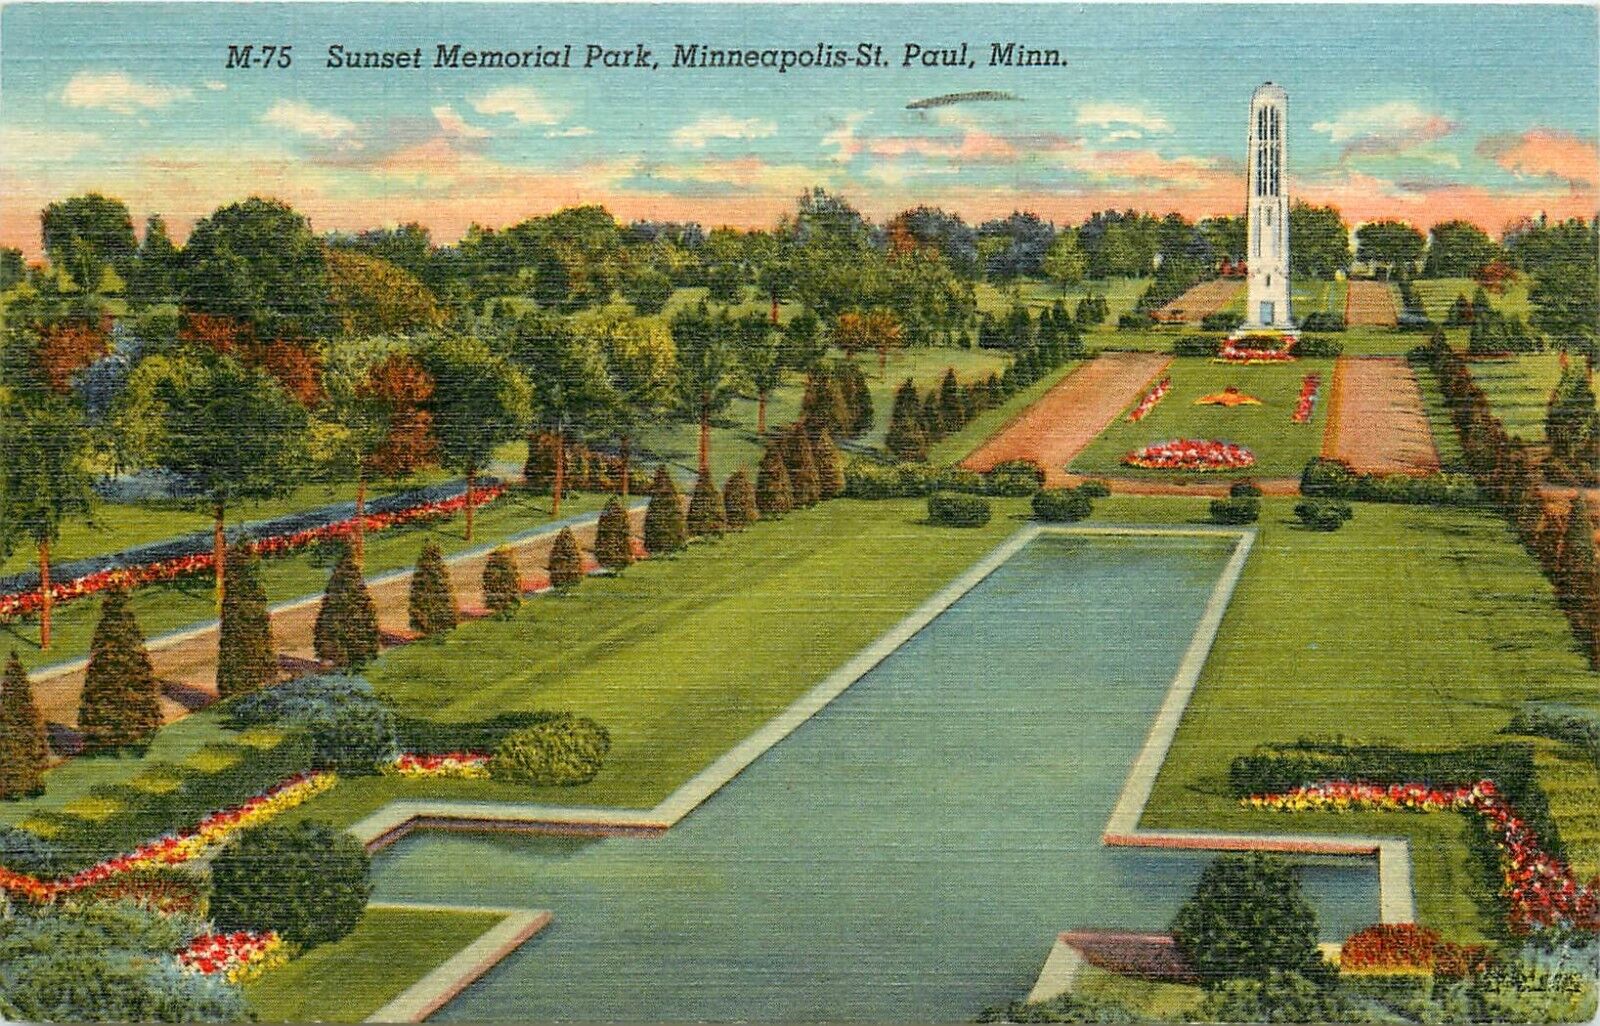 Sunset Memorial Park Minneapolis St Paul Minnesota pm 1952 Postcard